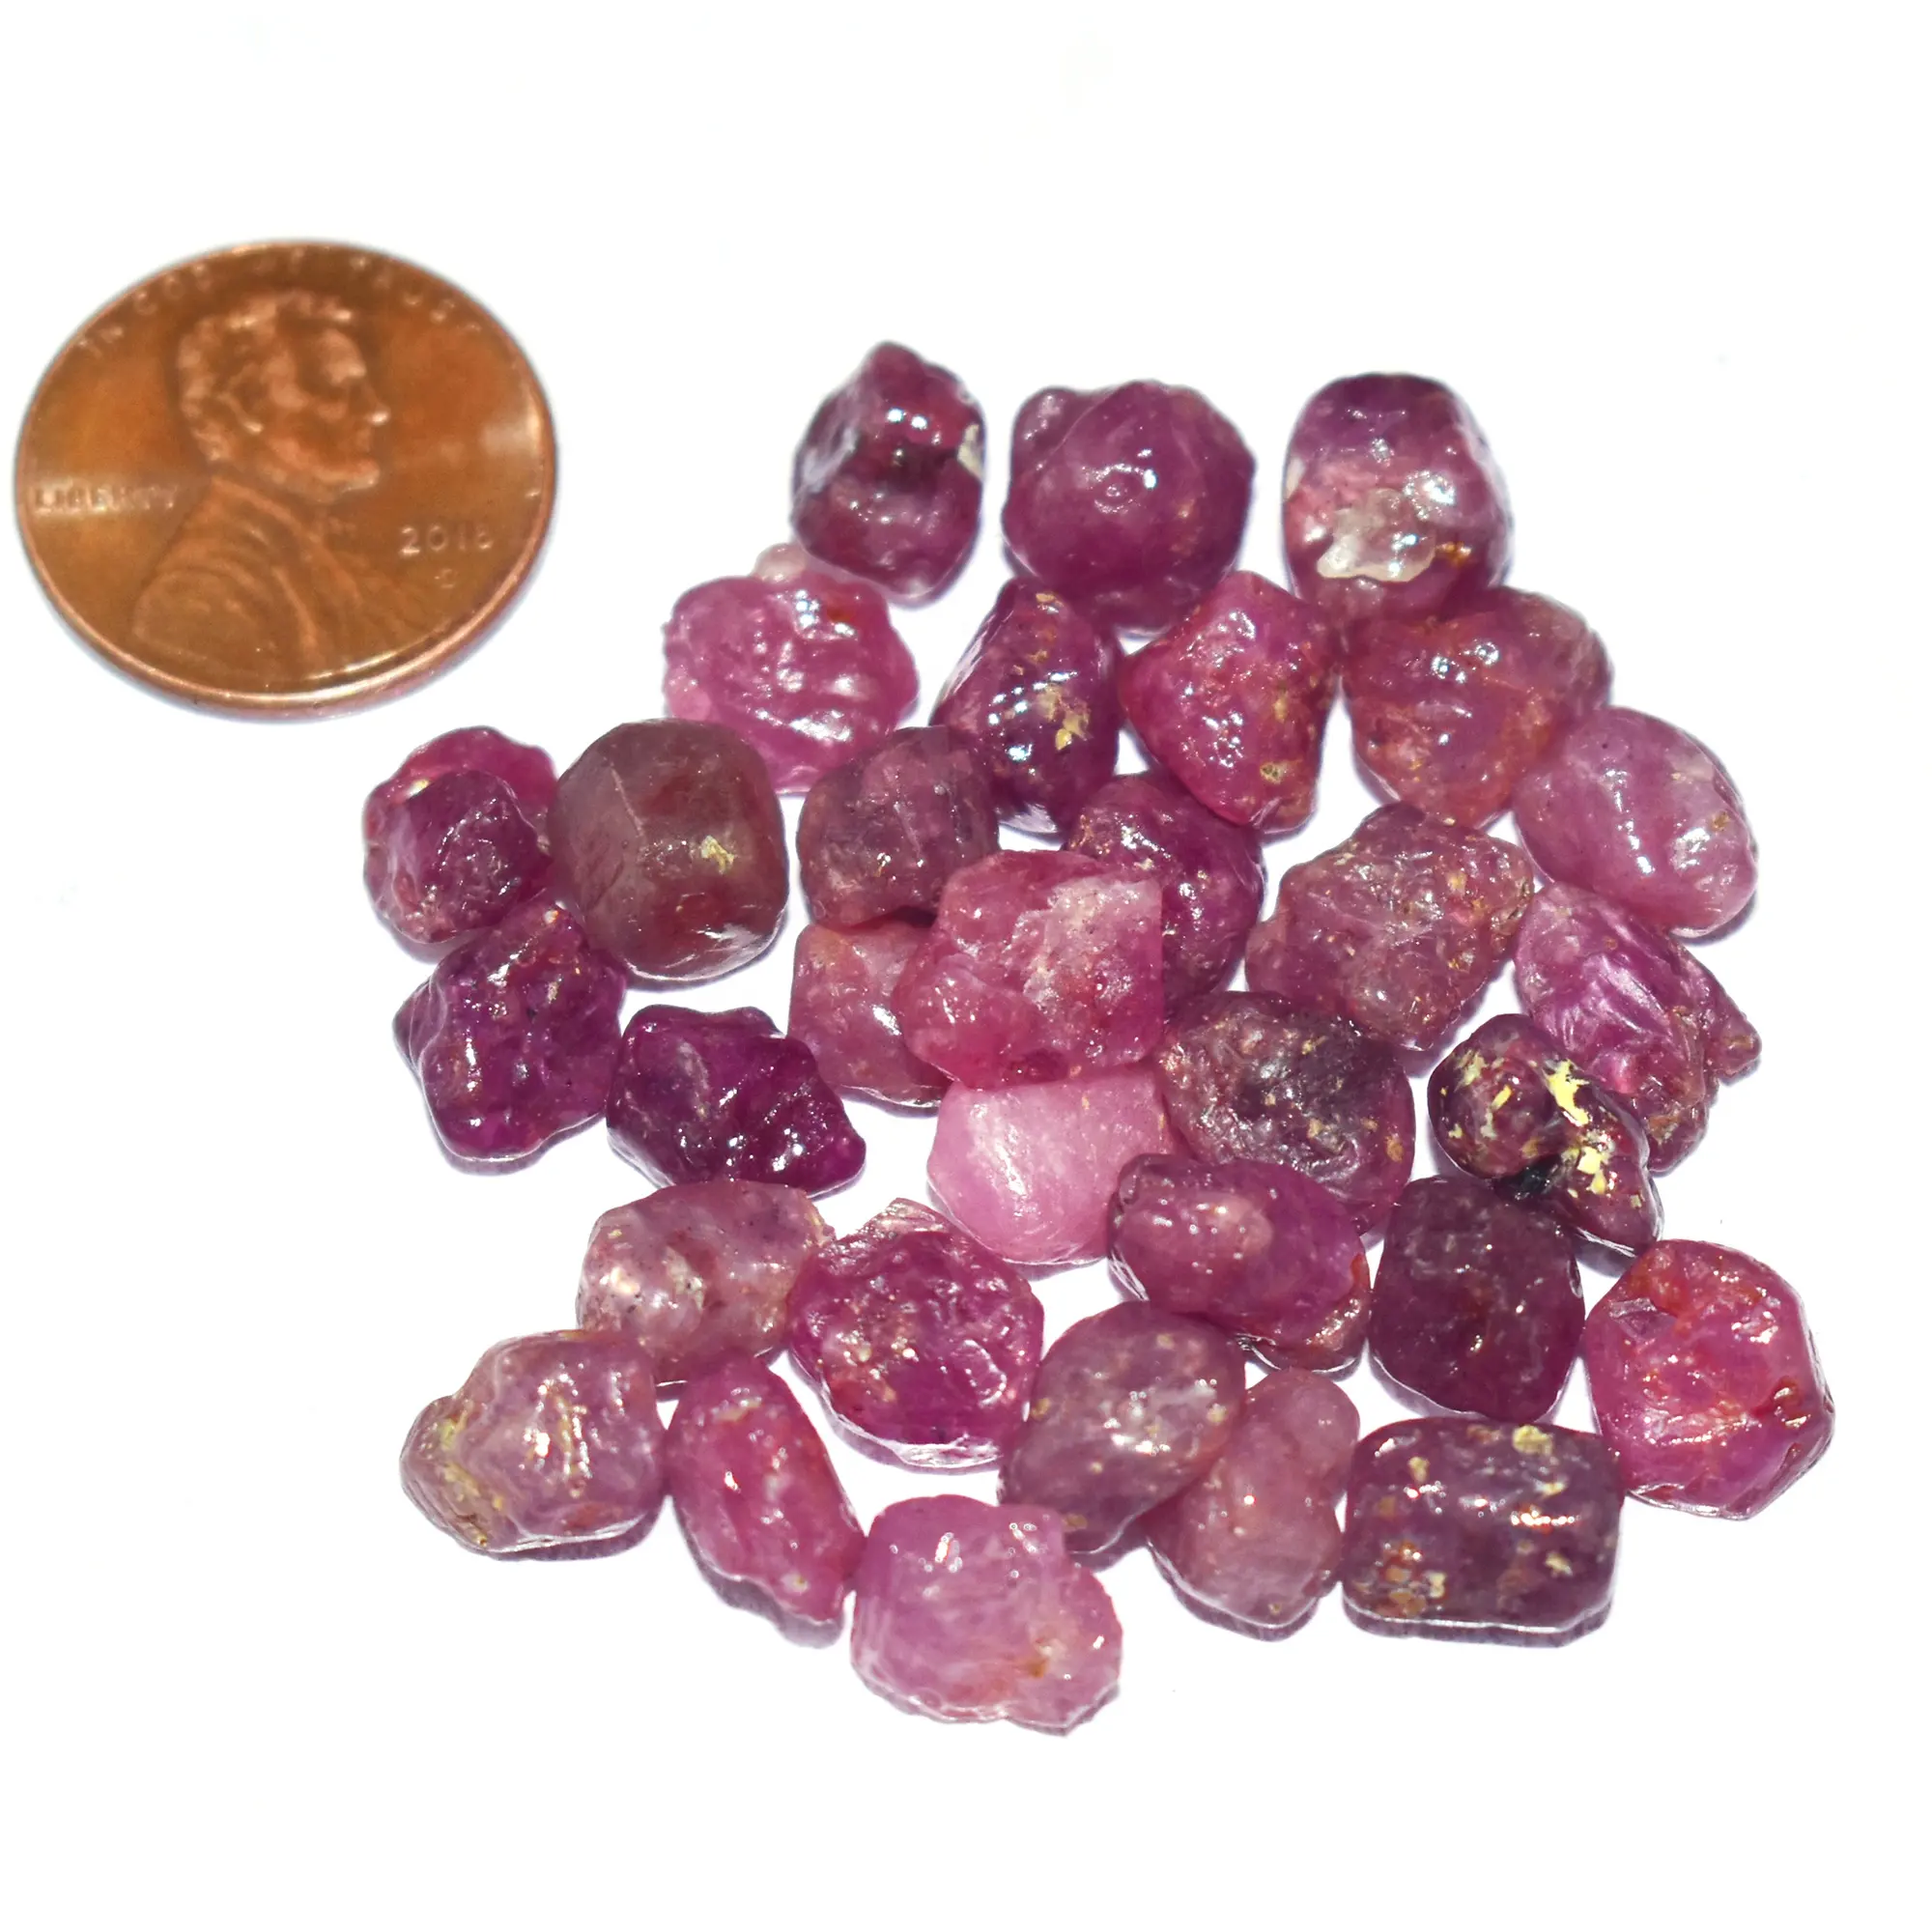 Rare Ruby Uncut Loose Gemstone Rough、Birthstone Gems For Sale、Genuine Wholesale Price Loose Stone Seller